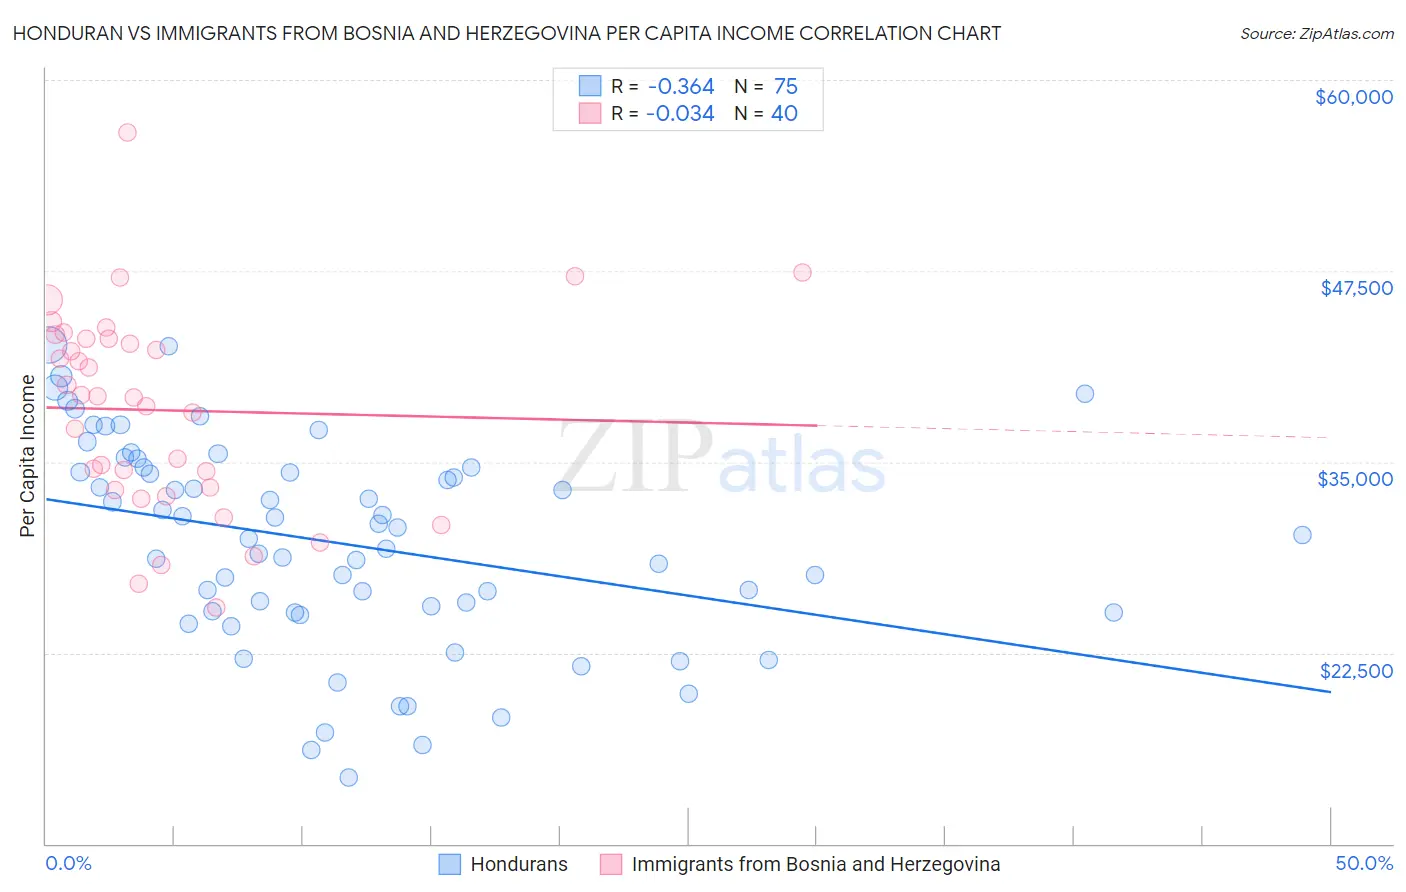 Honduran vs Immigrants from Bosnia and Herzegovina Per Capita Income